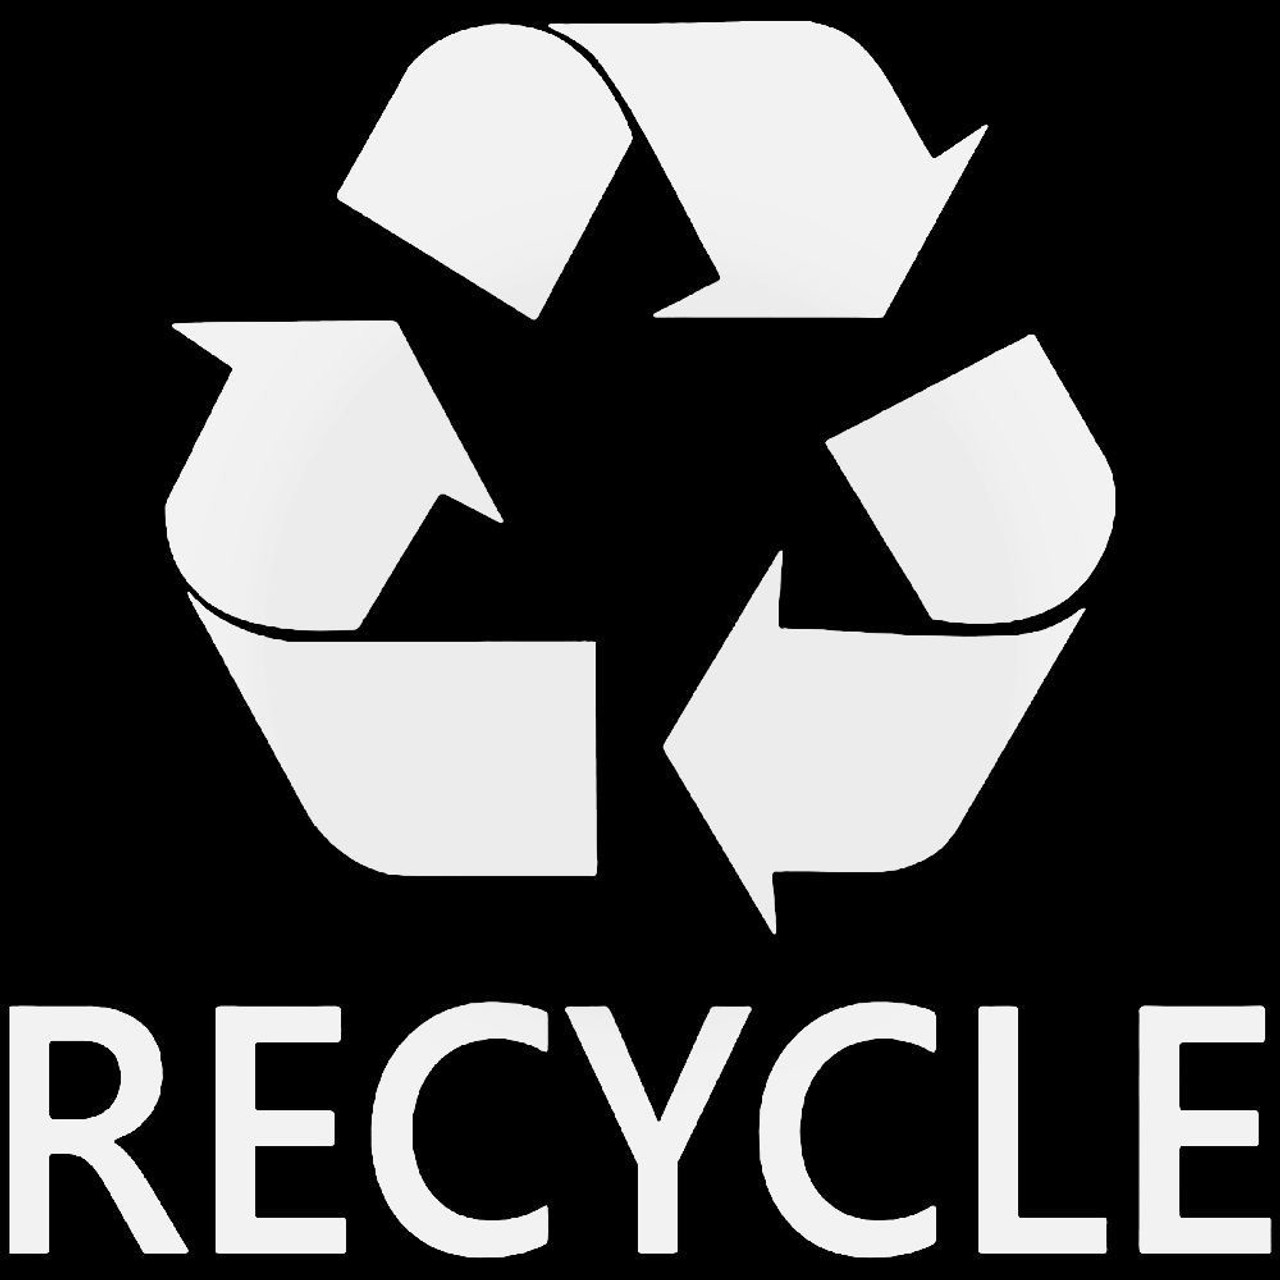 Recycle Trash Symbol 4 Vinyl Decal Sticker